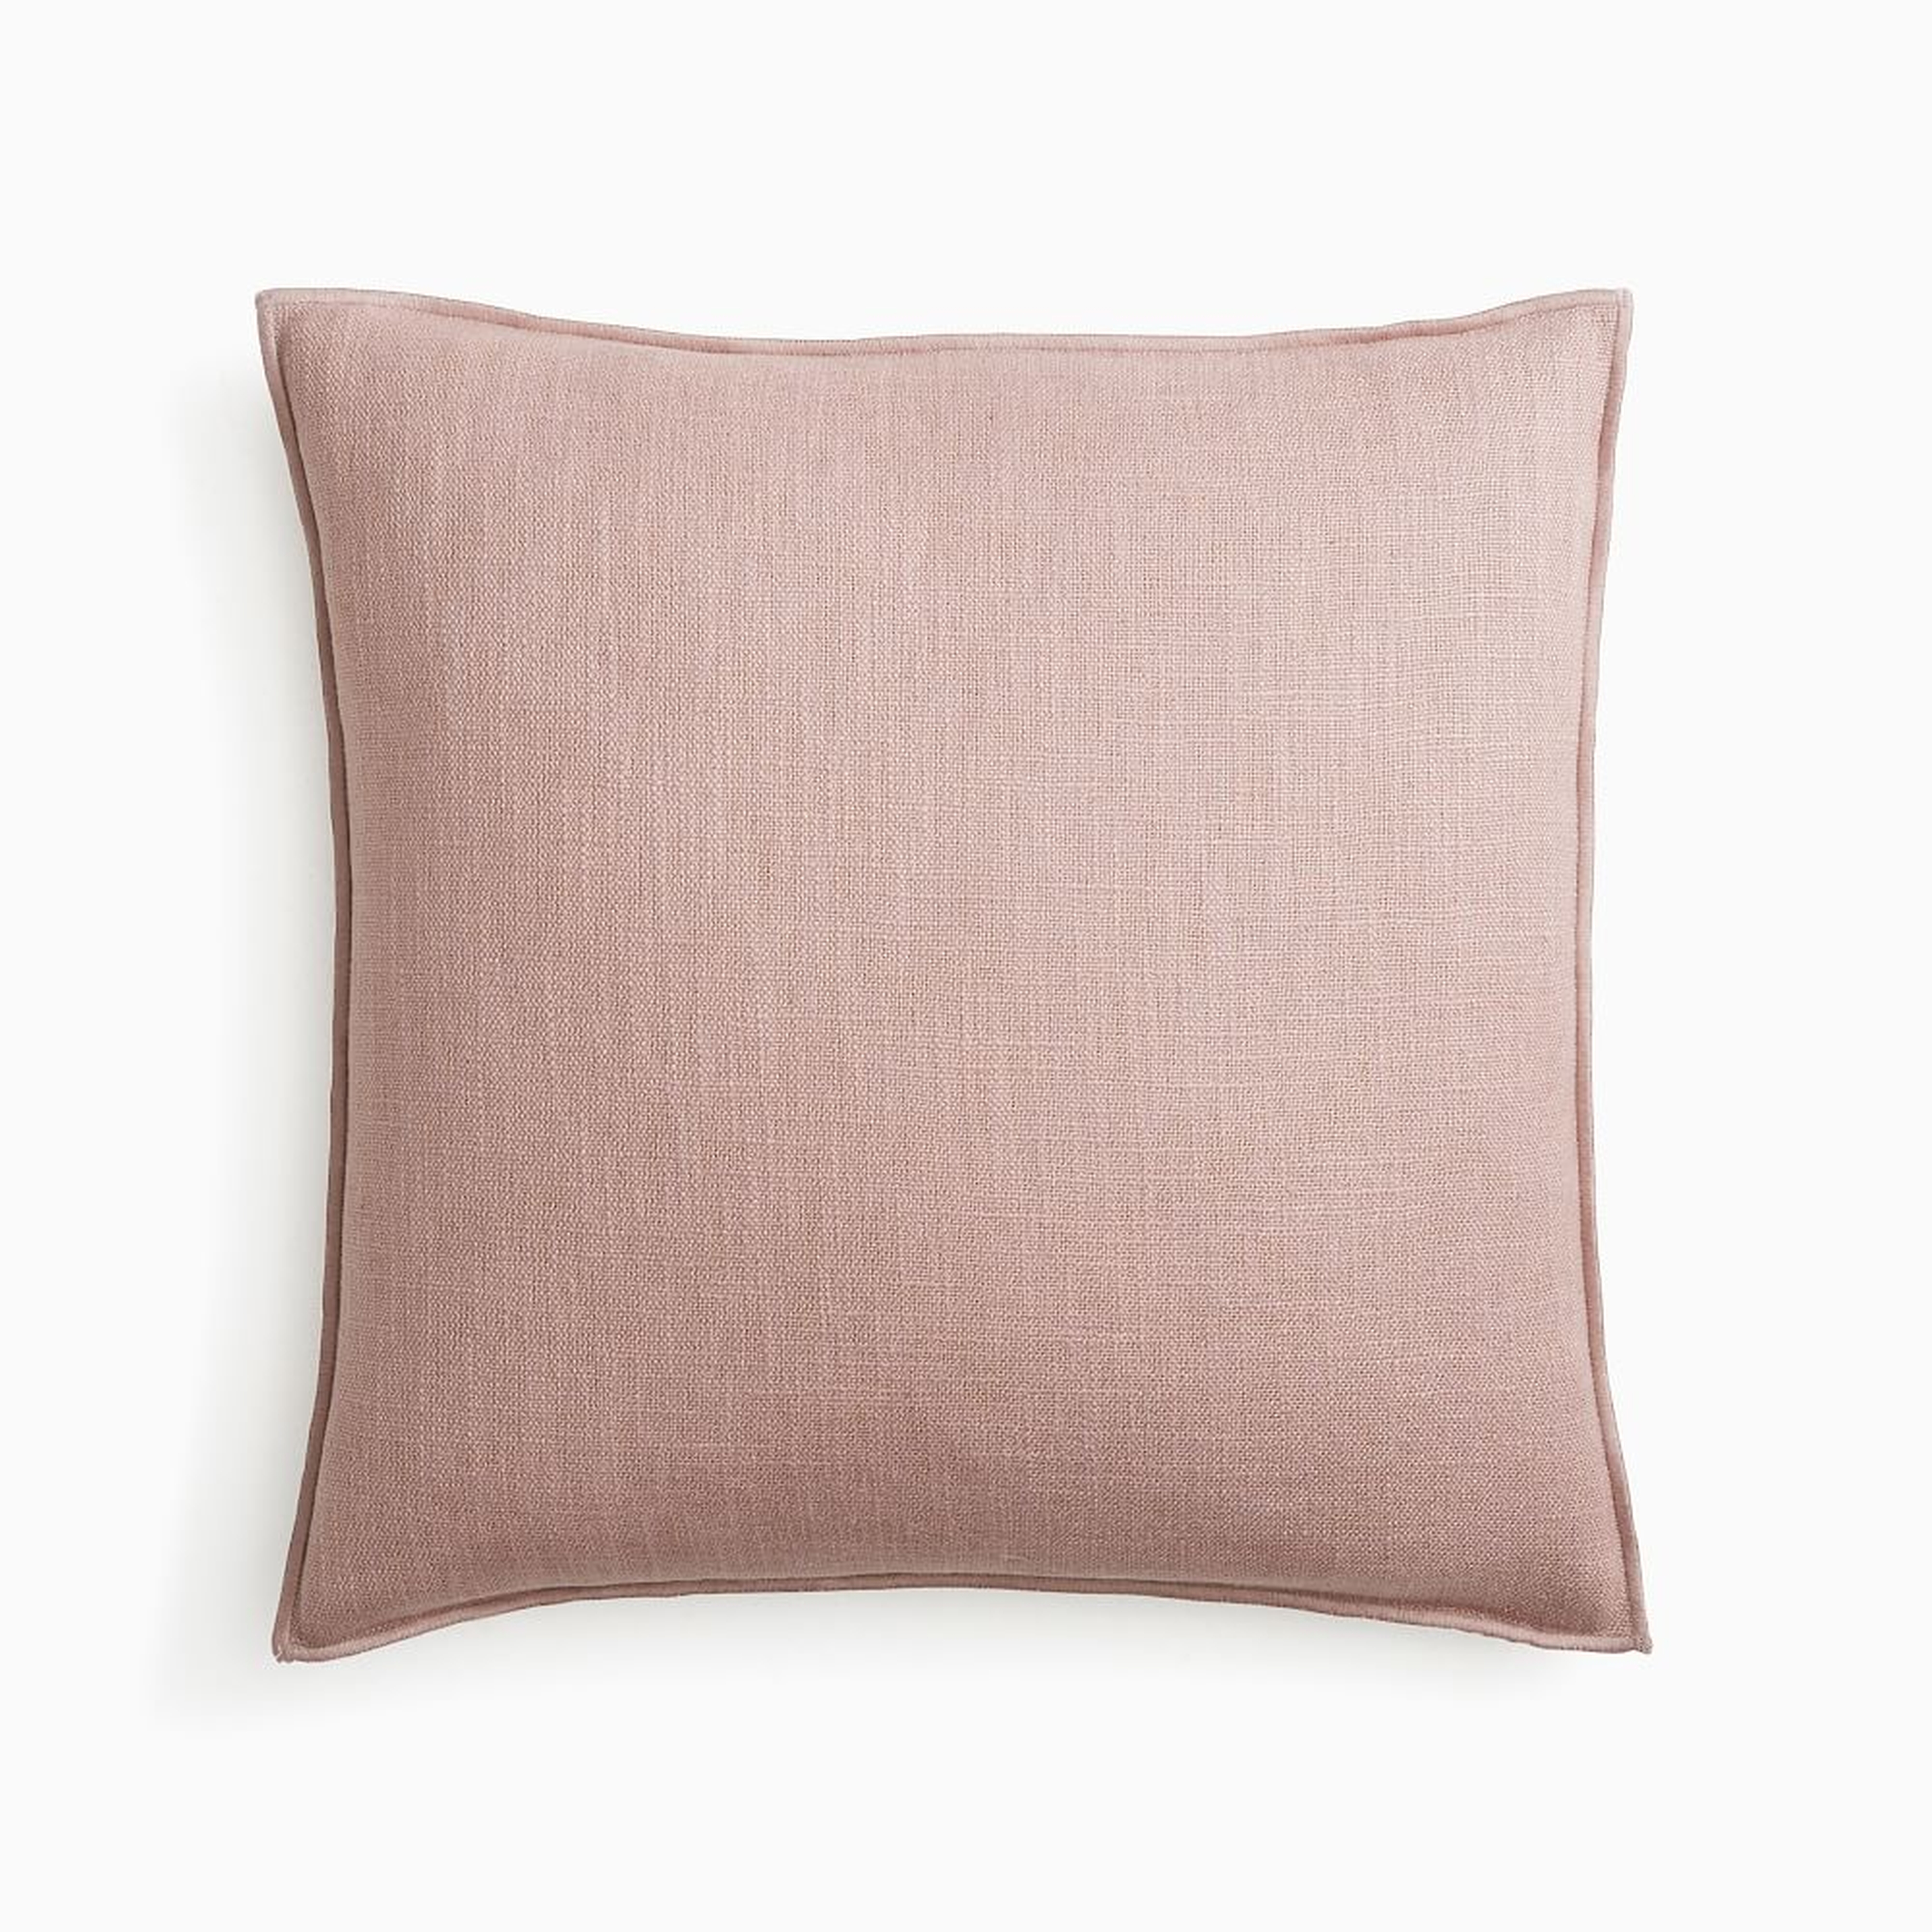 Classic Linen Pillow Cover, 20"x20", Adobe Rose - West Elm